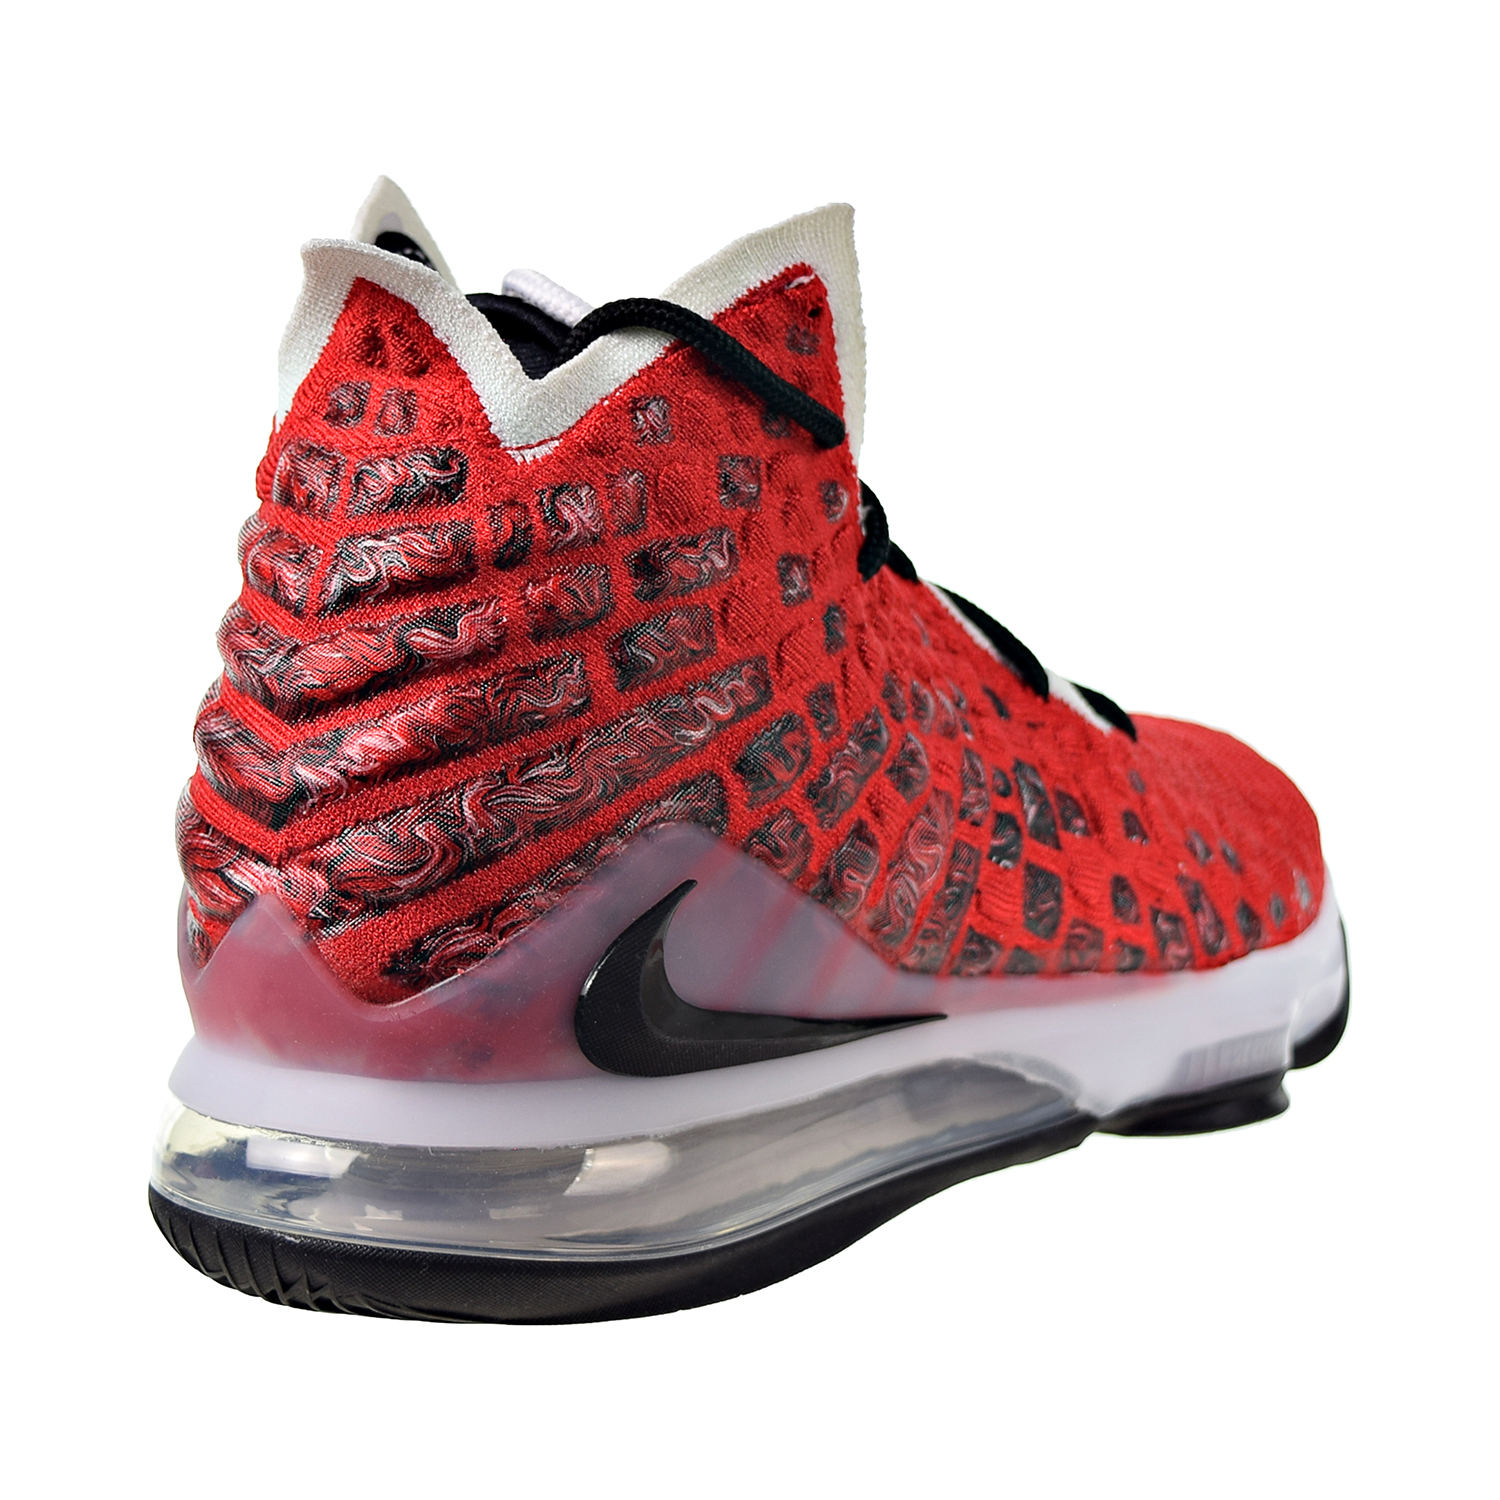 Nike LeBron 17 "Uptempo" Men's Basketball Shoes University Red-Black bq3177-601 - image 3 of 6